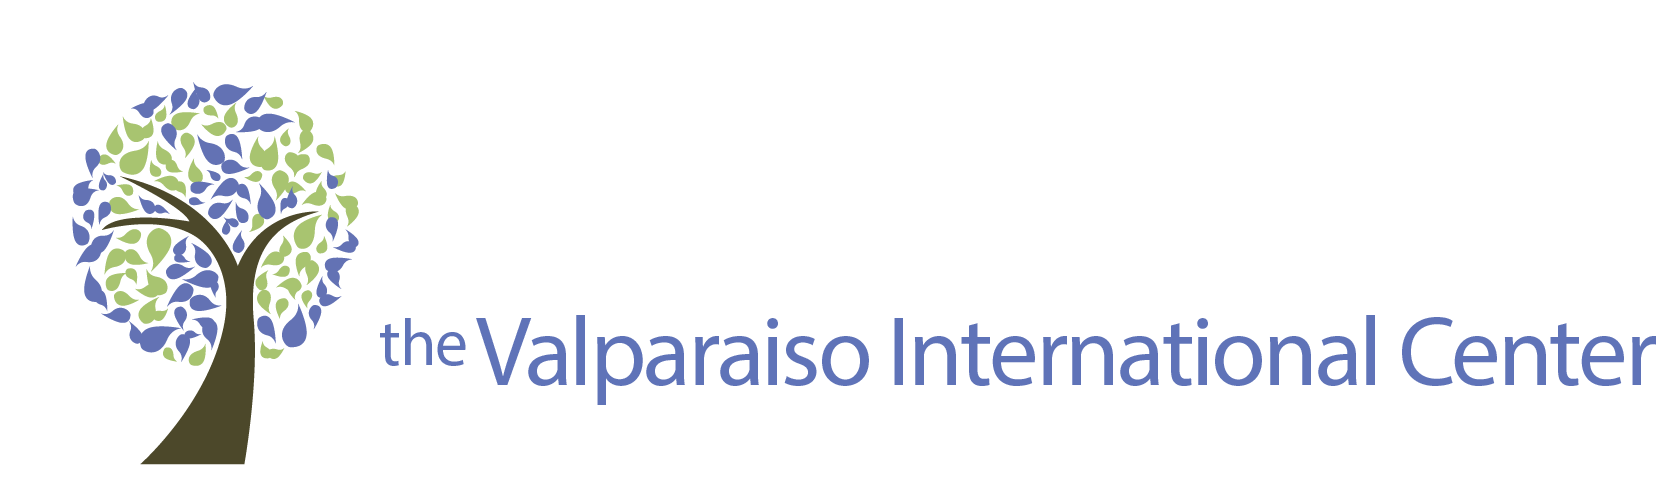 Valparaiso International Center